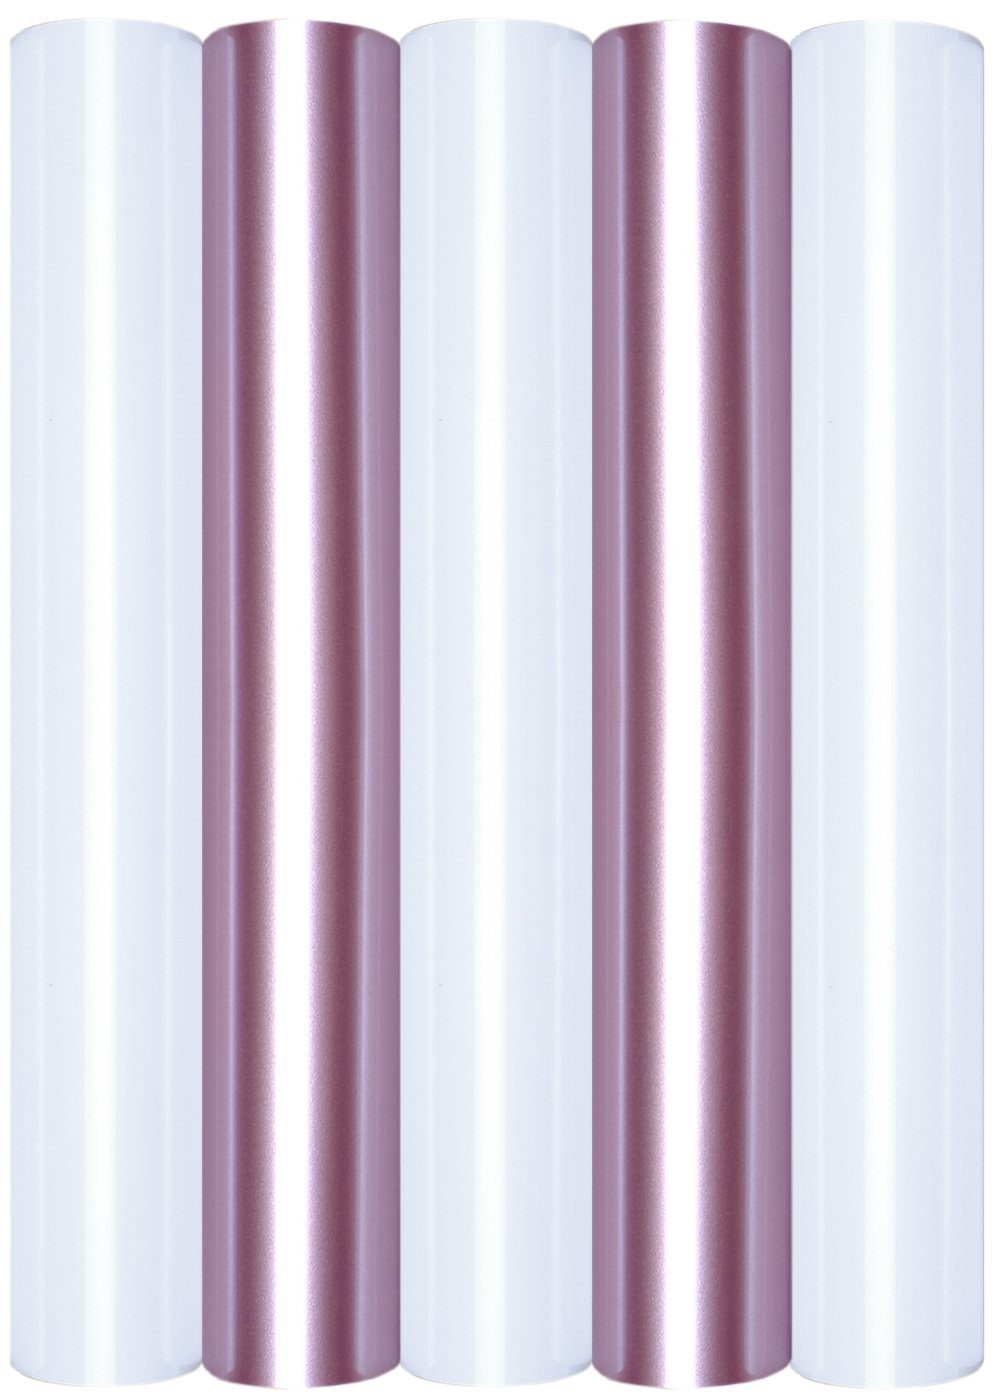 Hilltop Transparentpapier 18 x A4 Transferfolie, Textilfolie zum Aufbügeln auf Textilien White&Rosé Gold